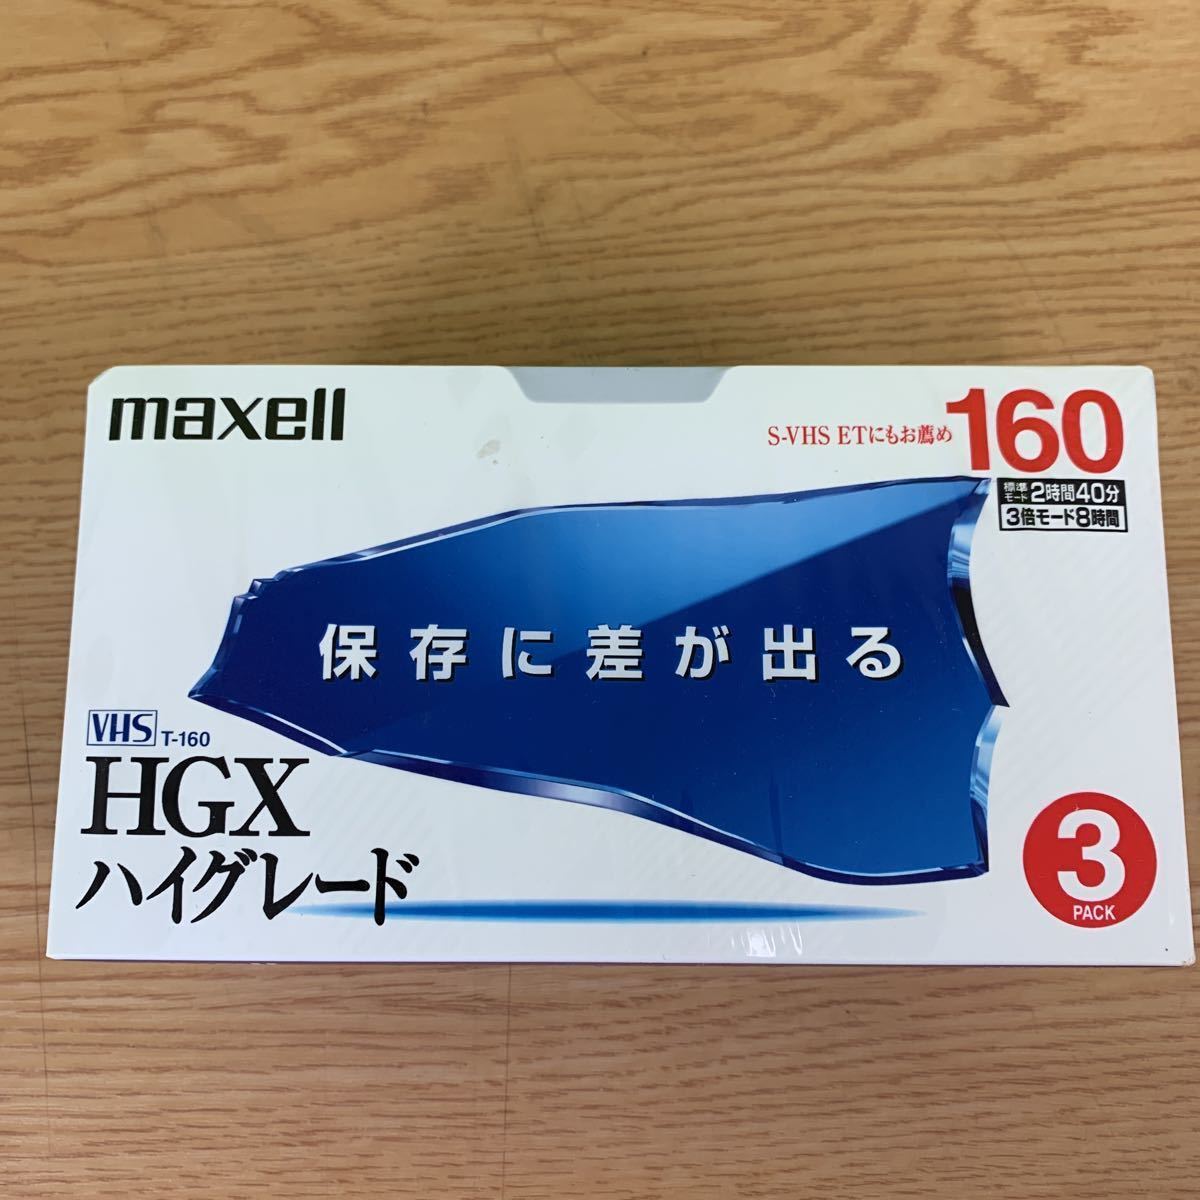 maxell マクセル VHS HGXハイグレード 160 PACK K121